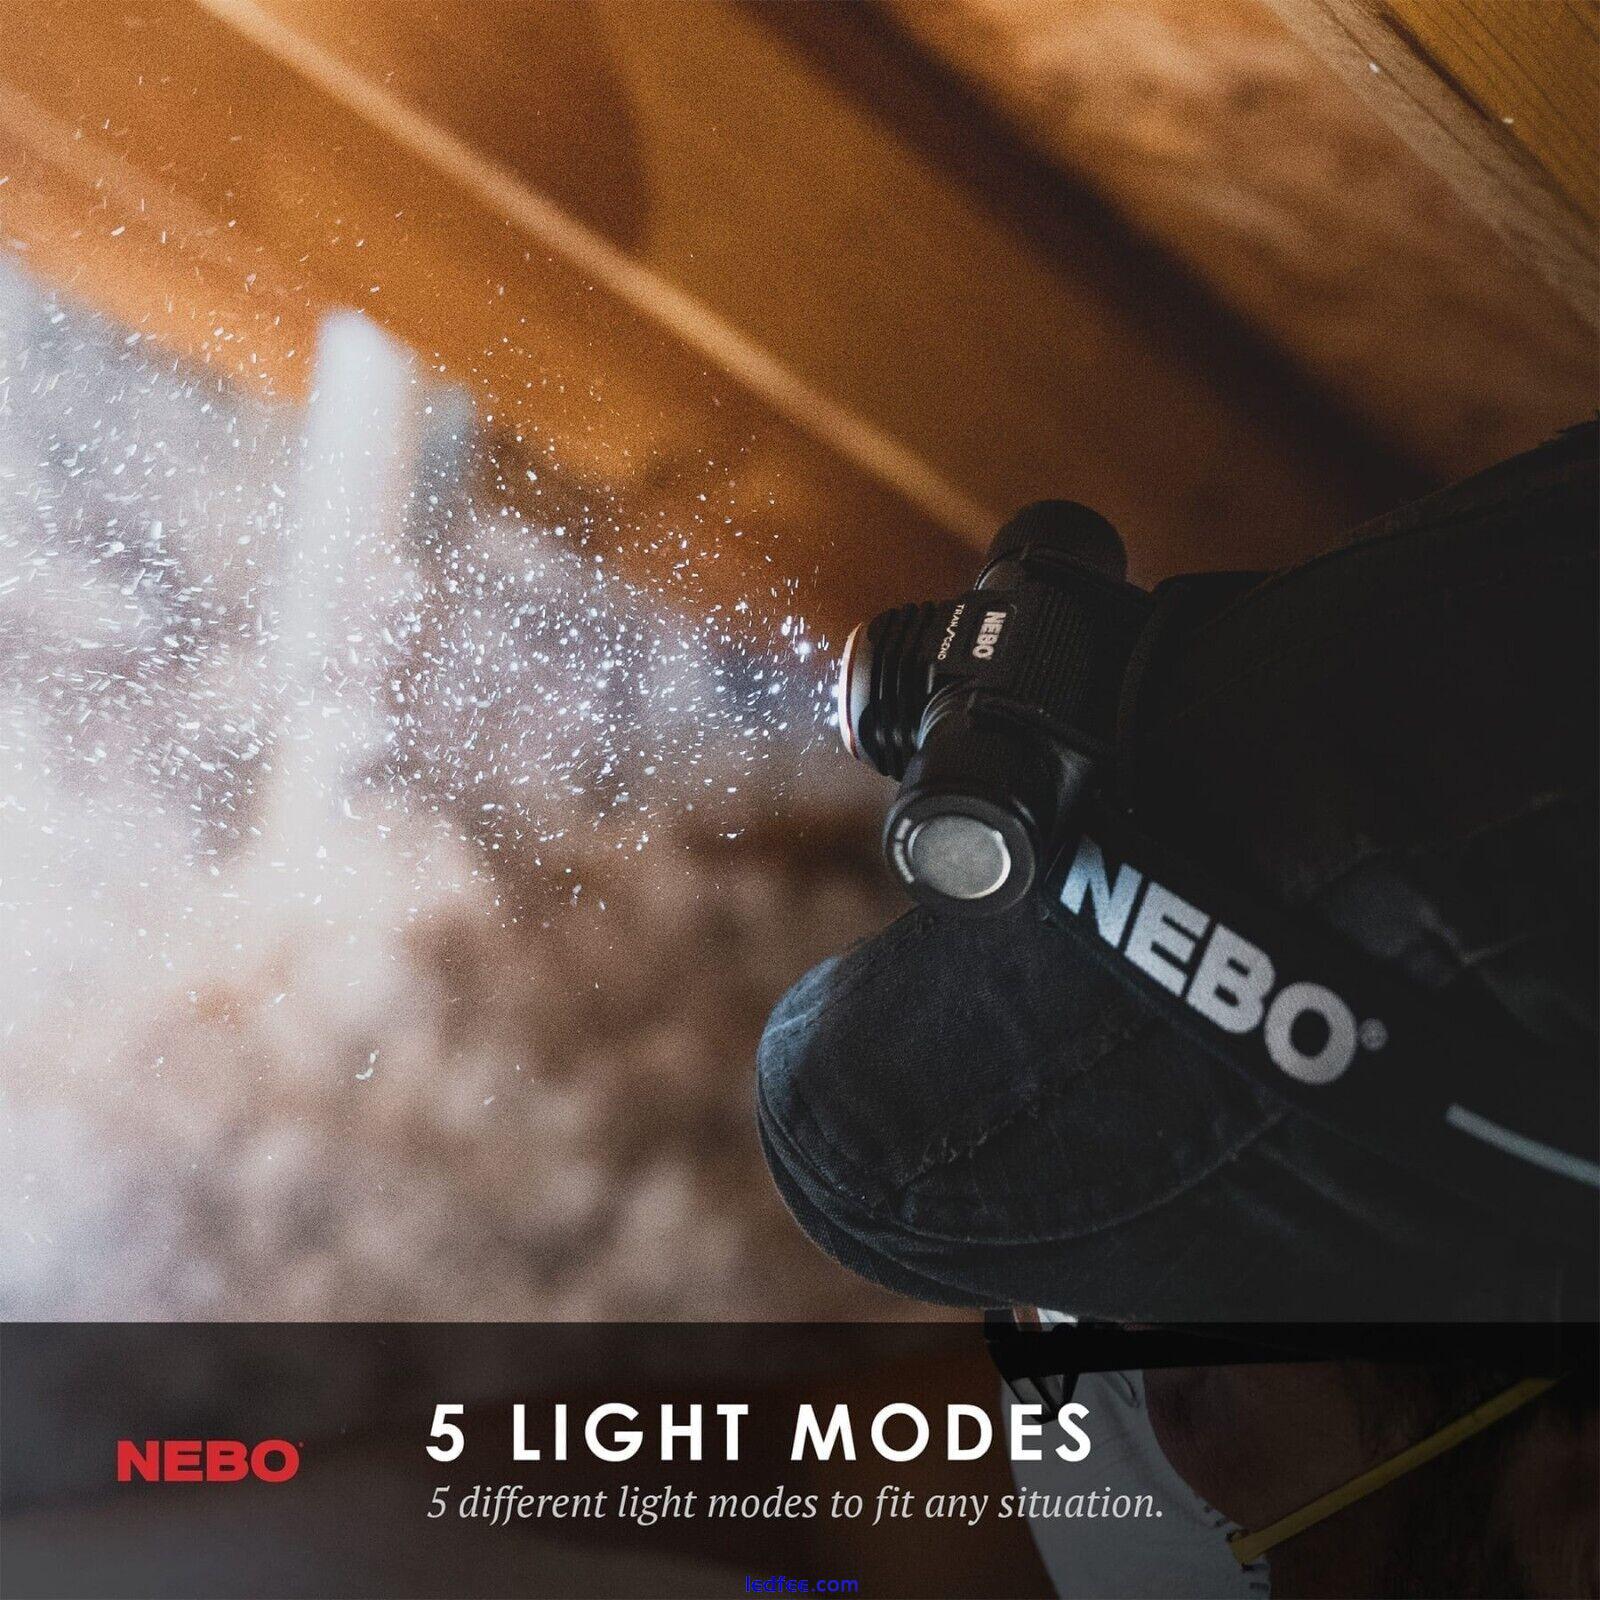 Nebo Transcend 500 LED Rechargeable 500 Lumen Tilting Head Torch Light Lamp 2 